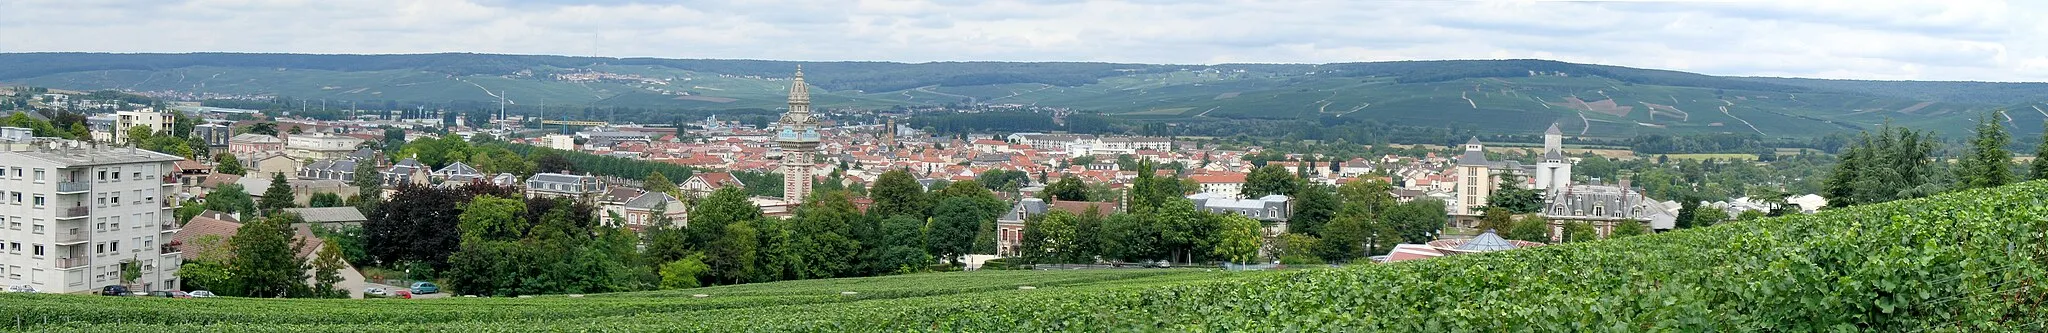 Image de Champagne-Ardenne